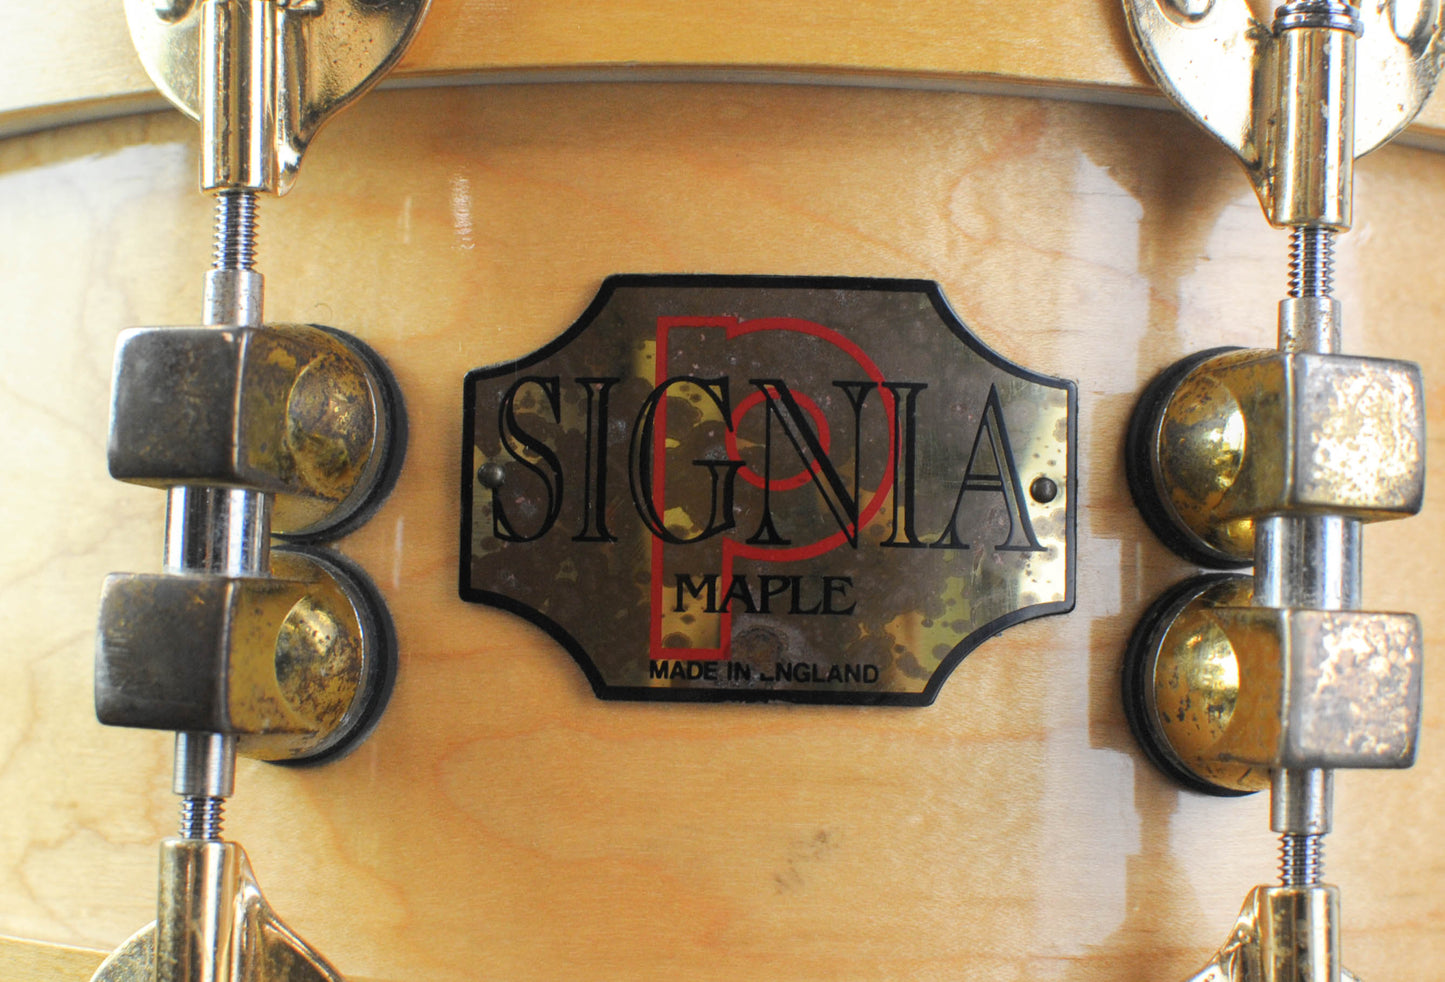 1990s Premier Signia 5.5x14 Maple Snare Drum